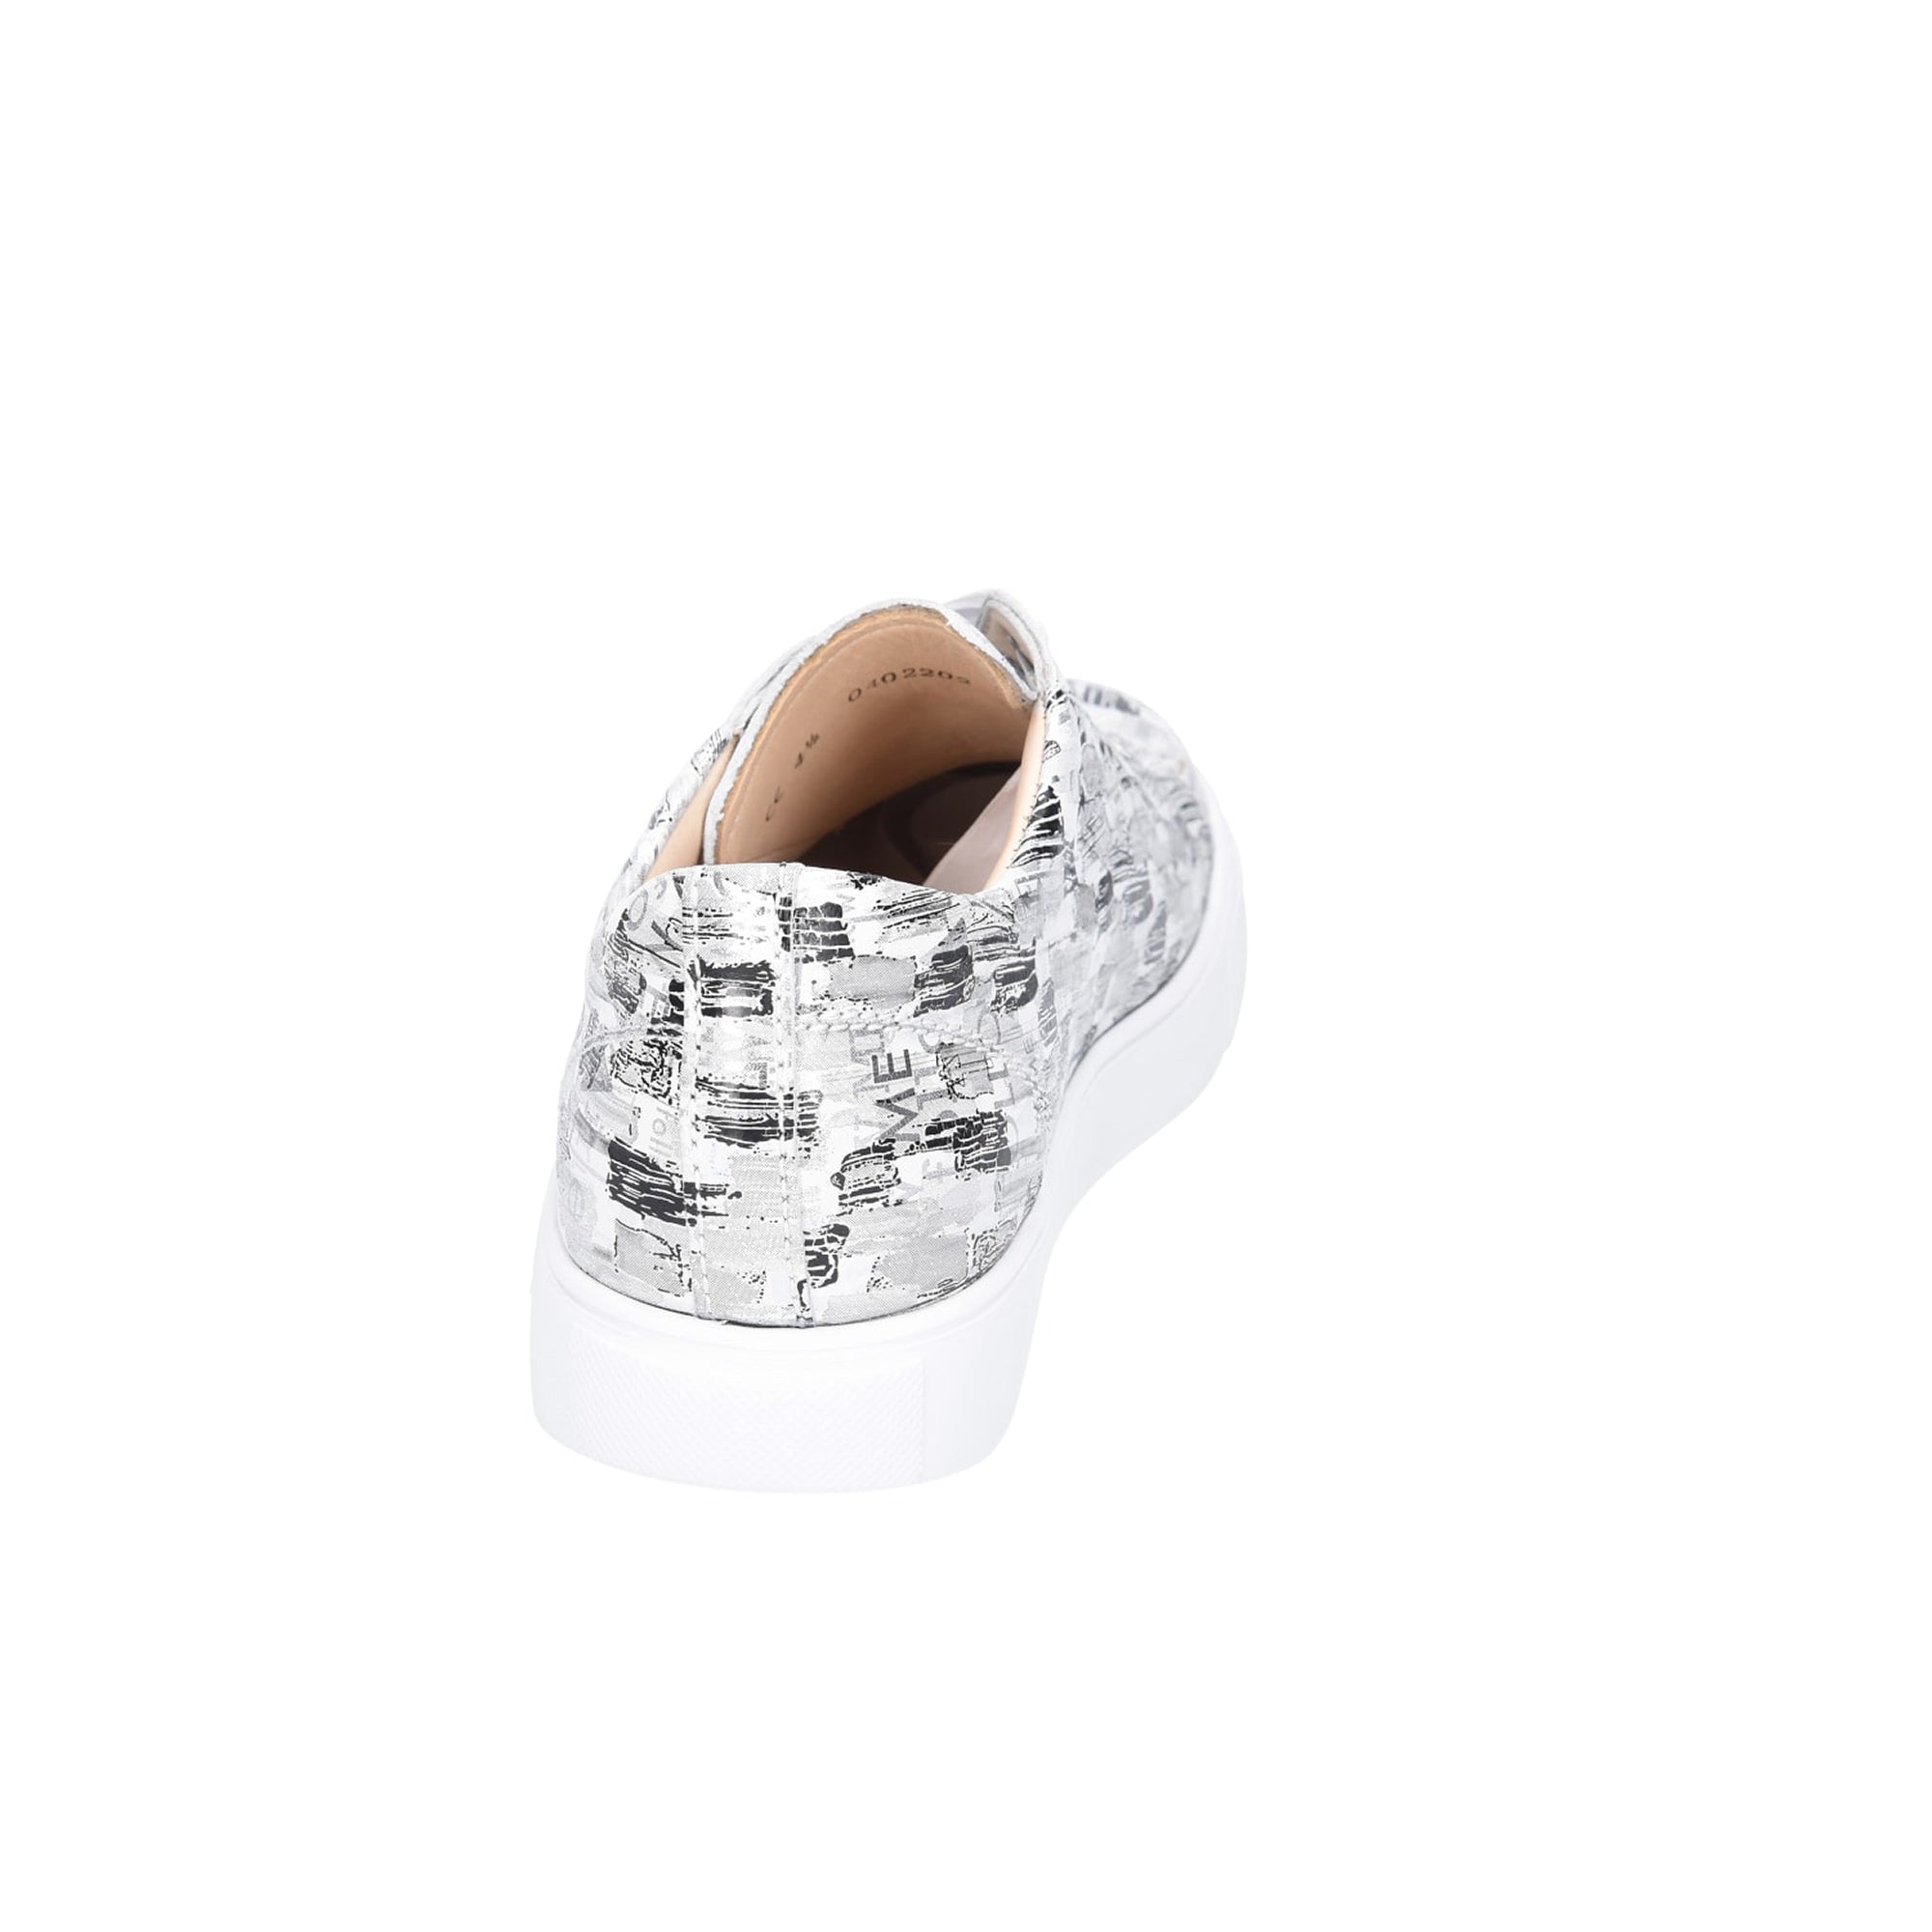 Finn Comfort Elpaso Women's Silver Comfort Shoes - Stylish & Durable